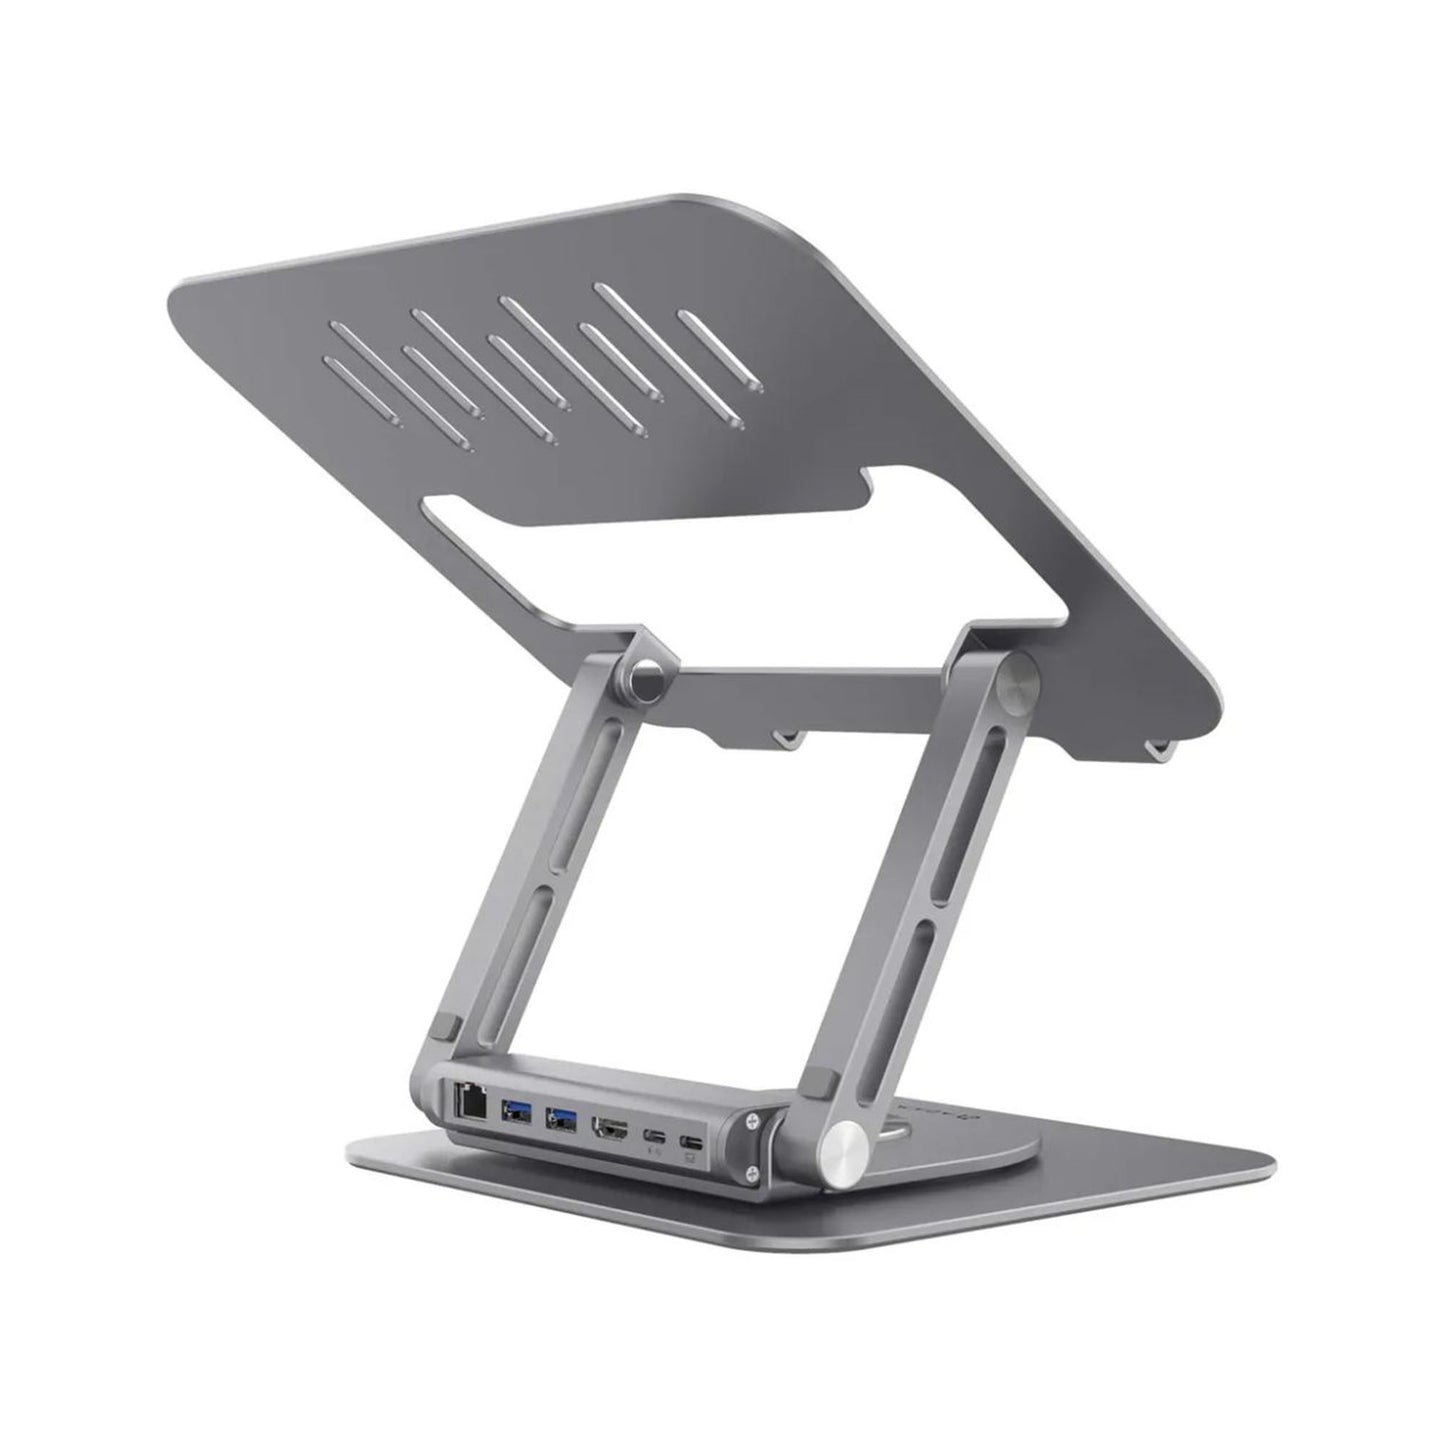 ADAM ELEMENTS Casa Hub Pro USB C 6-in-1 Laptop Stand Hub - Grey